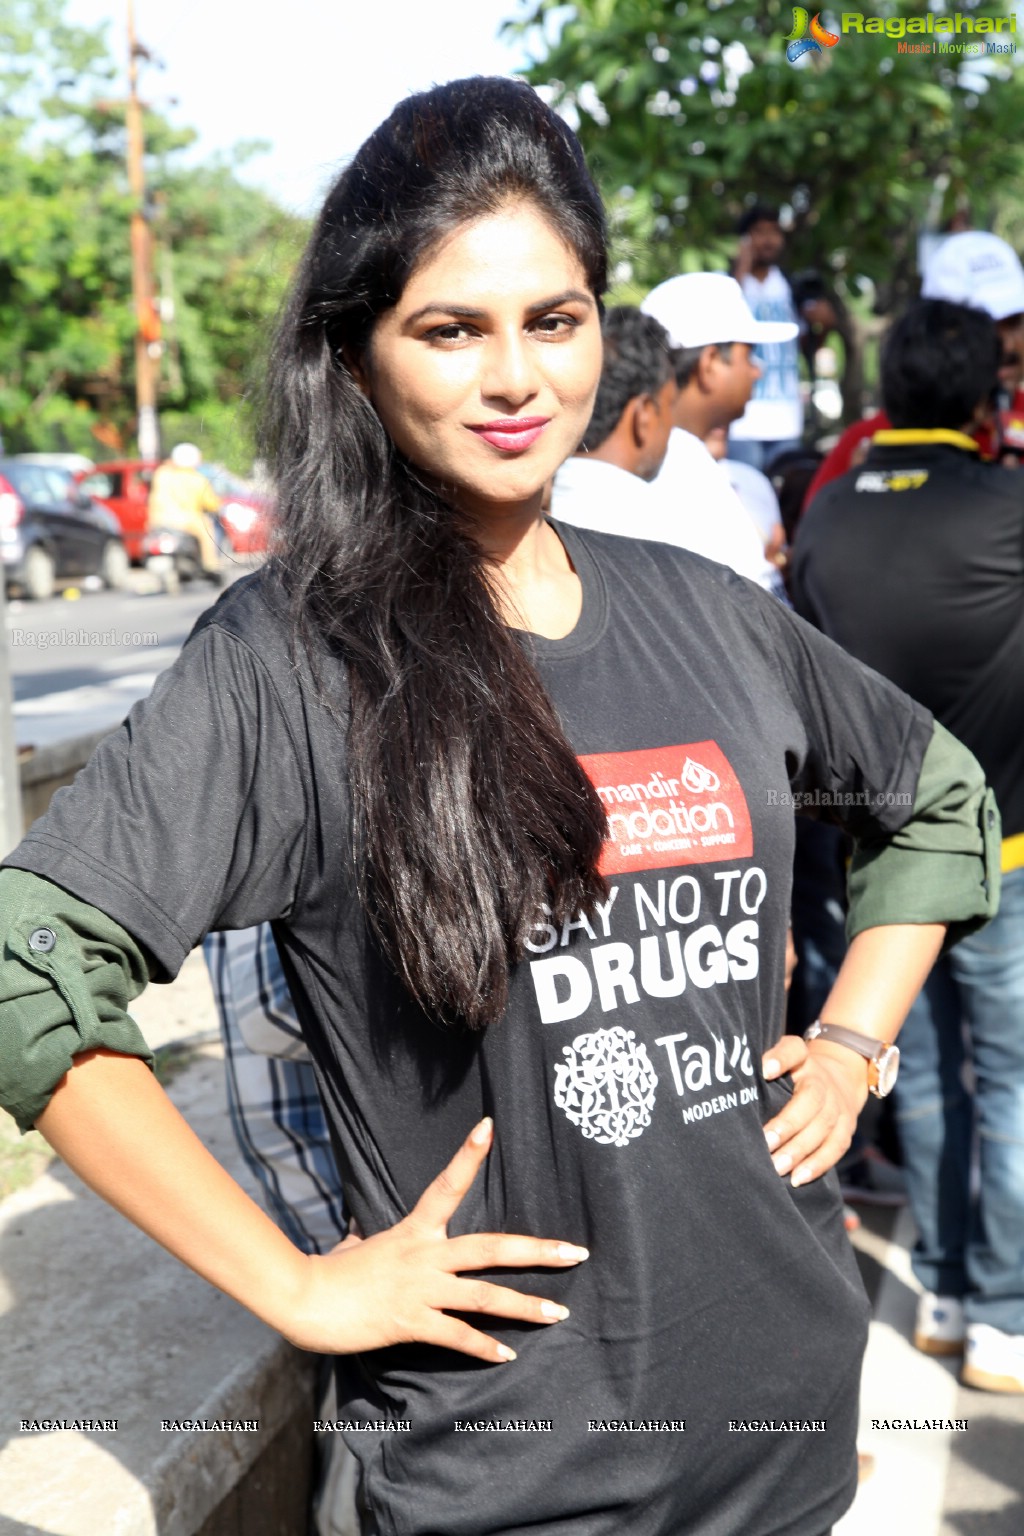 Say No To Drugs - Walk for a Cause by MAA and Kalamandir Foundation at KBR Park